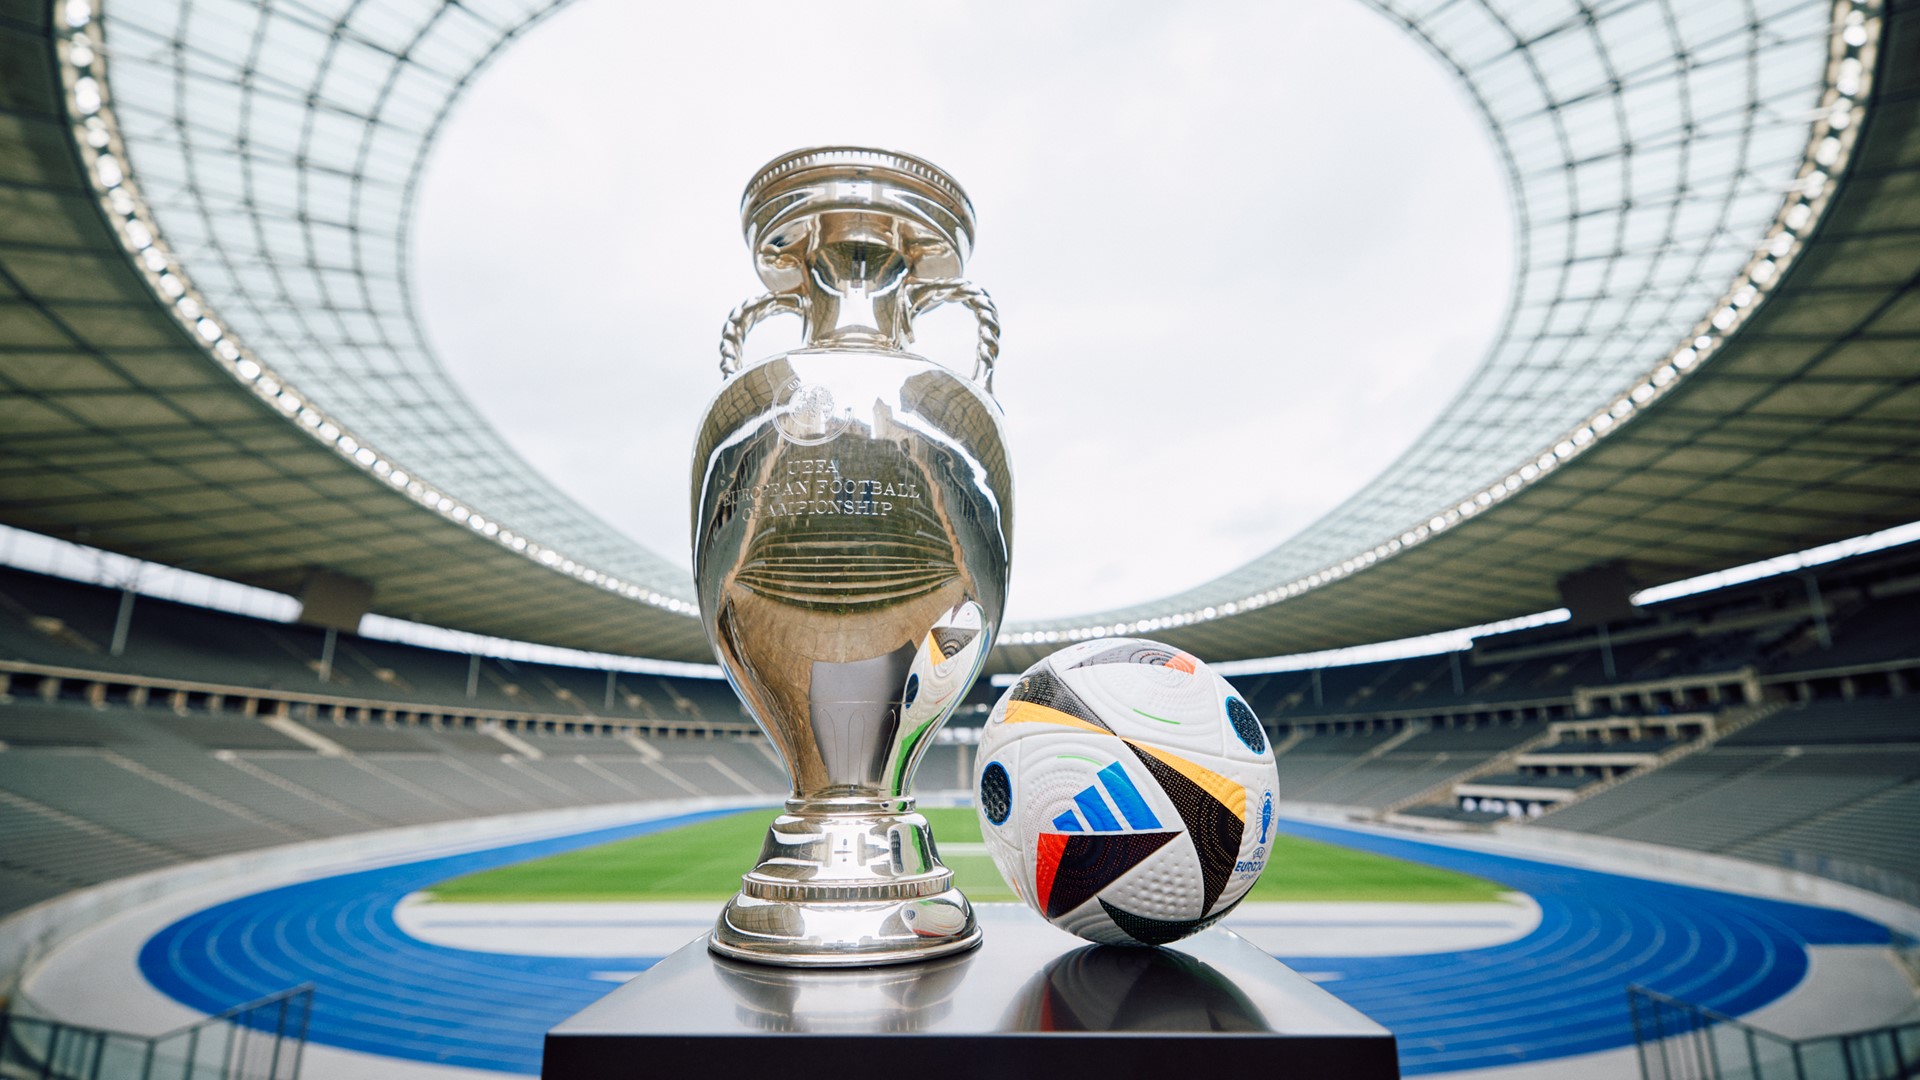 Out of Stock~ Adidas Brazuca Final Top Replique Match Ball Replica FIFA  Size 5